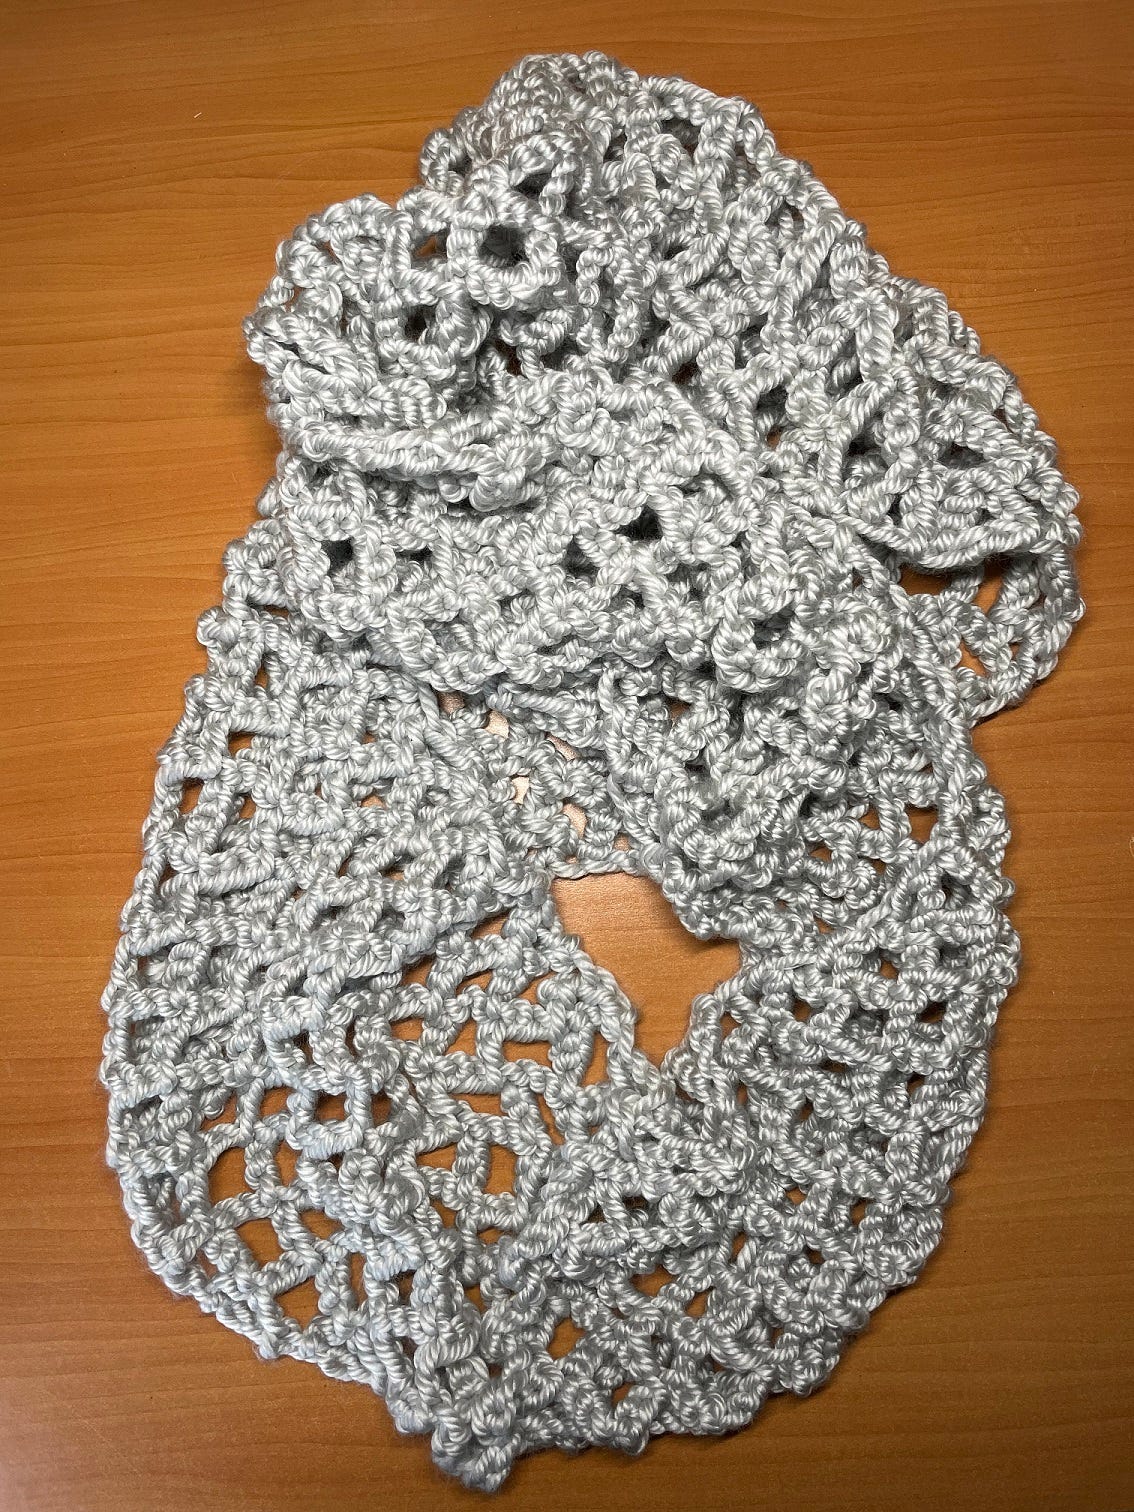 Crochet: diamond lattice chain scarf